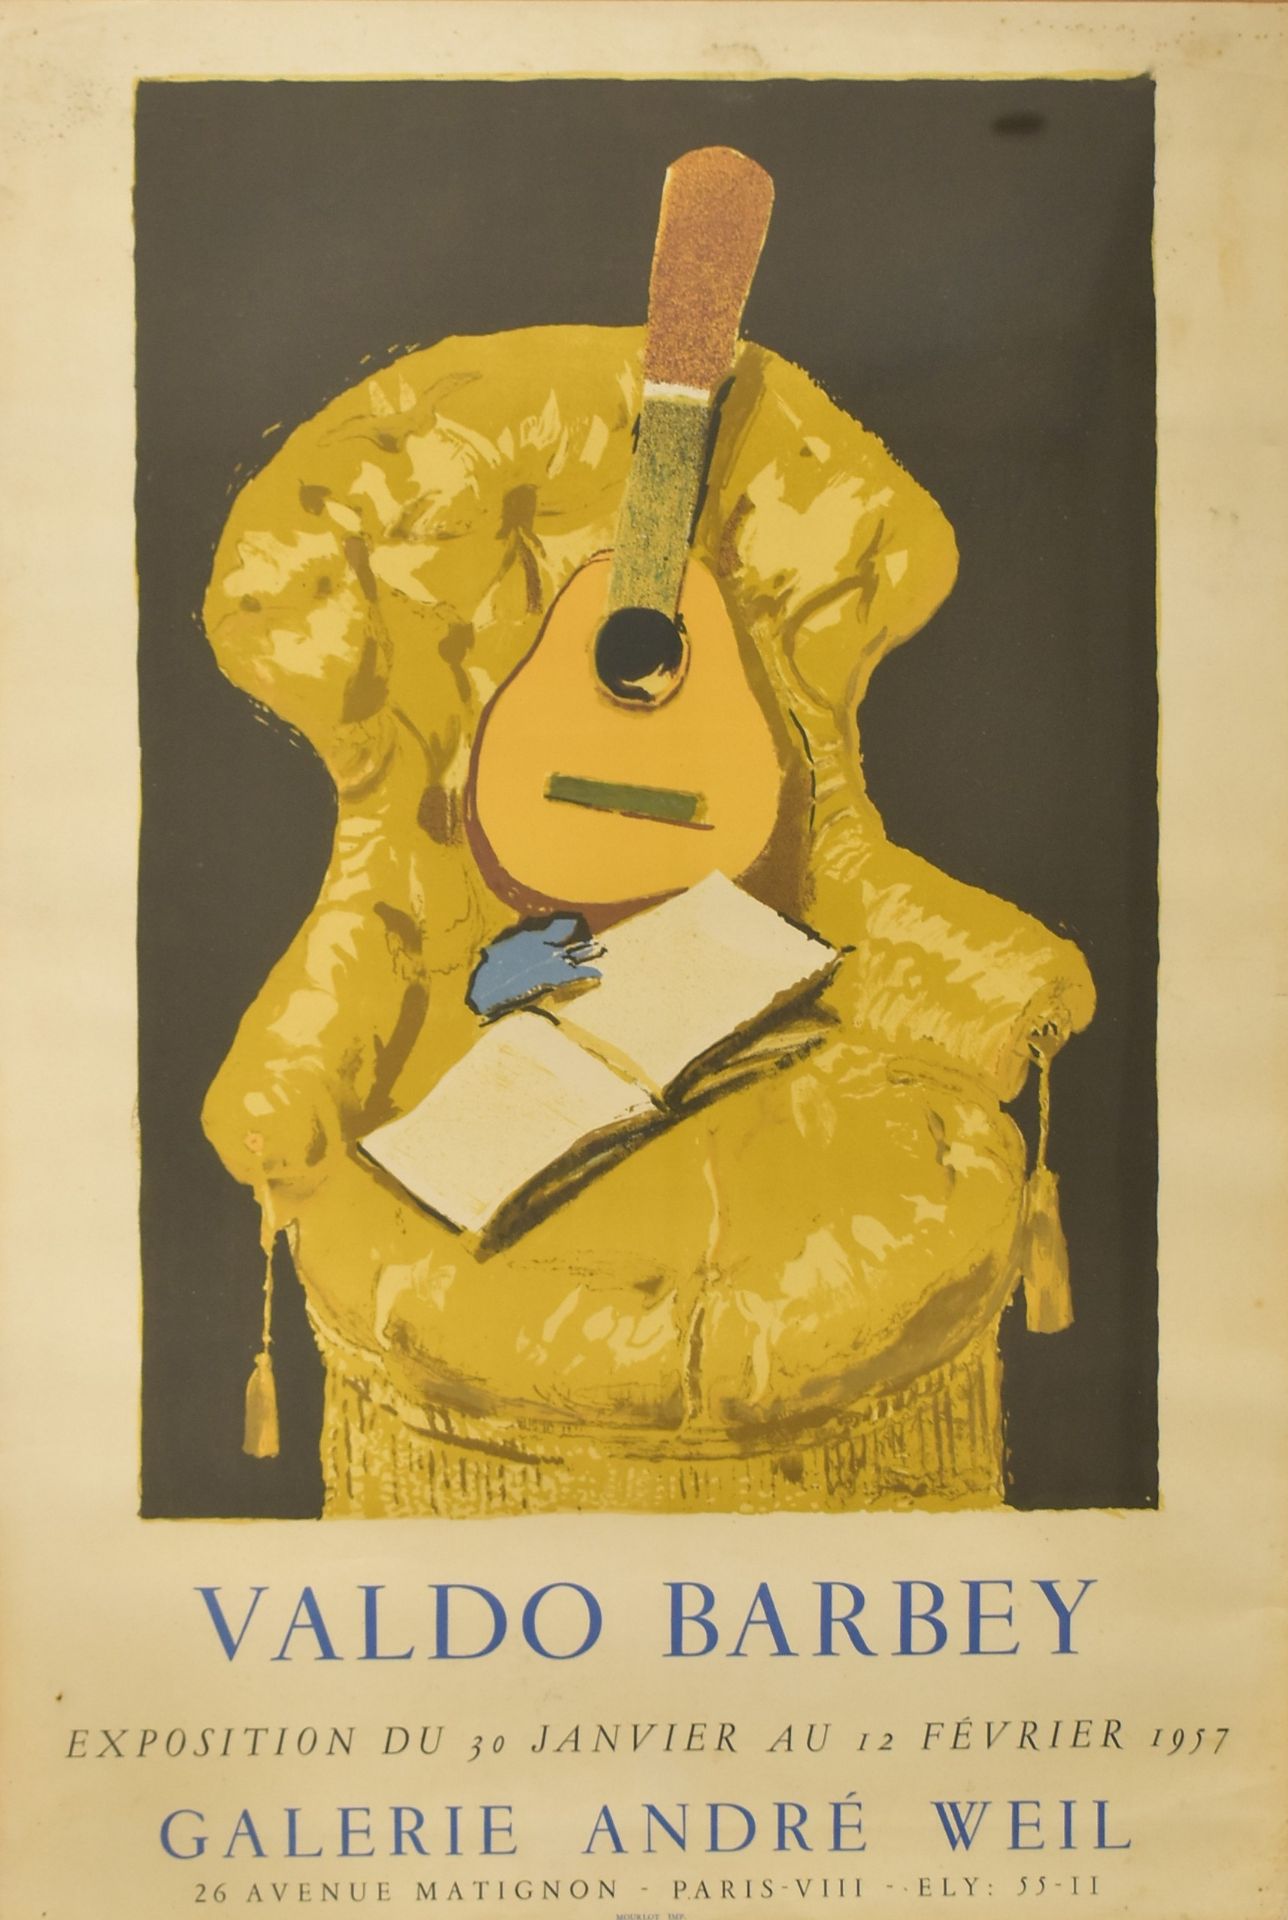 VALDO BARBEY - MID CENTURY EXHIBITION ADVERTISING POSTER